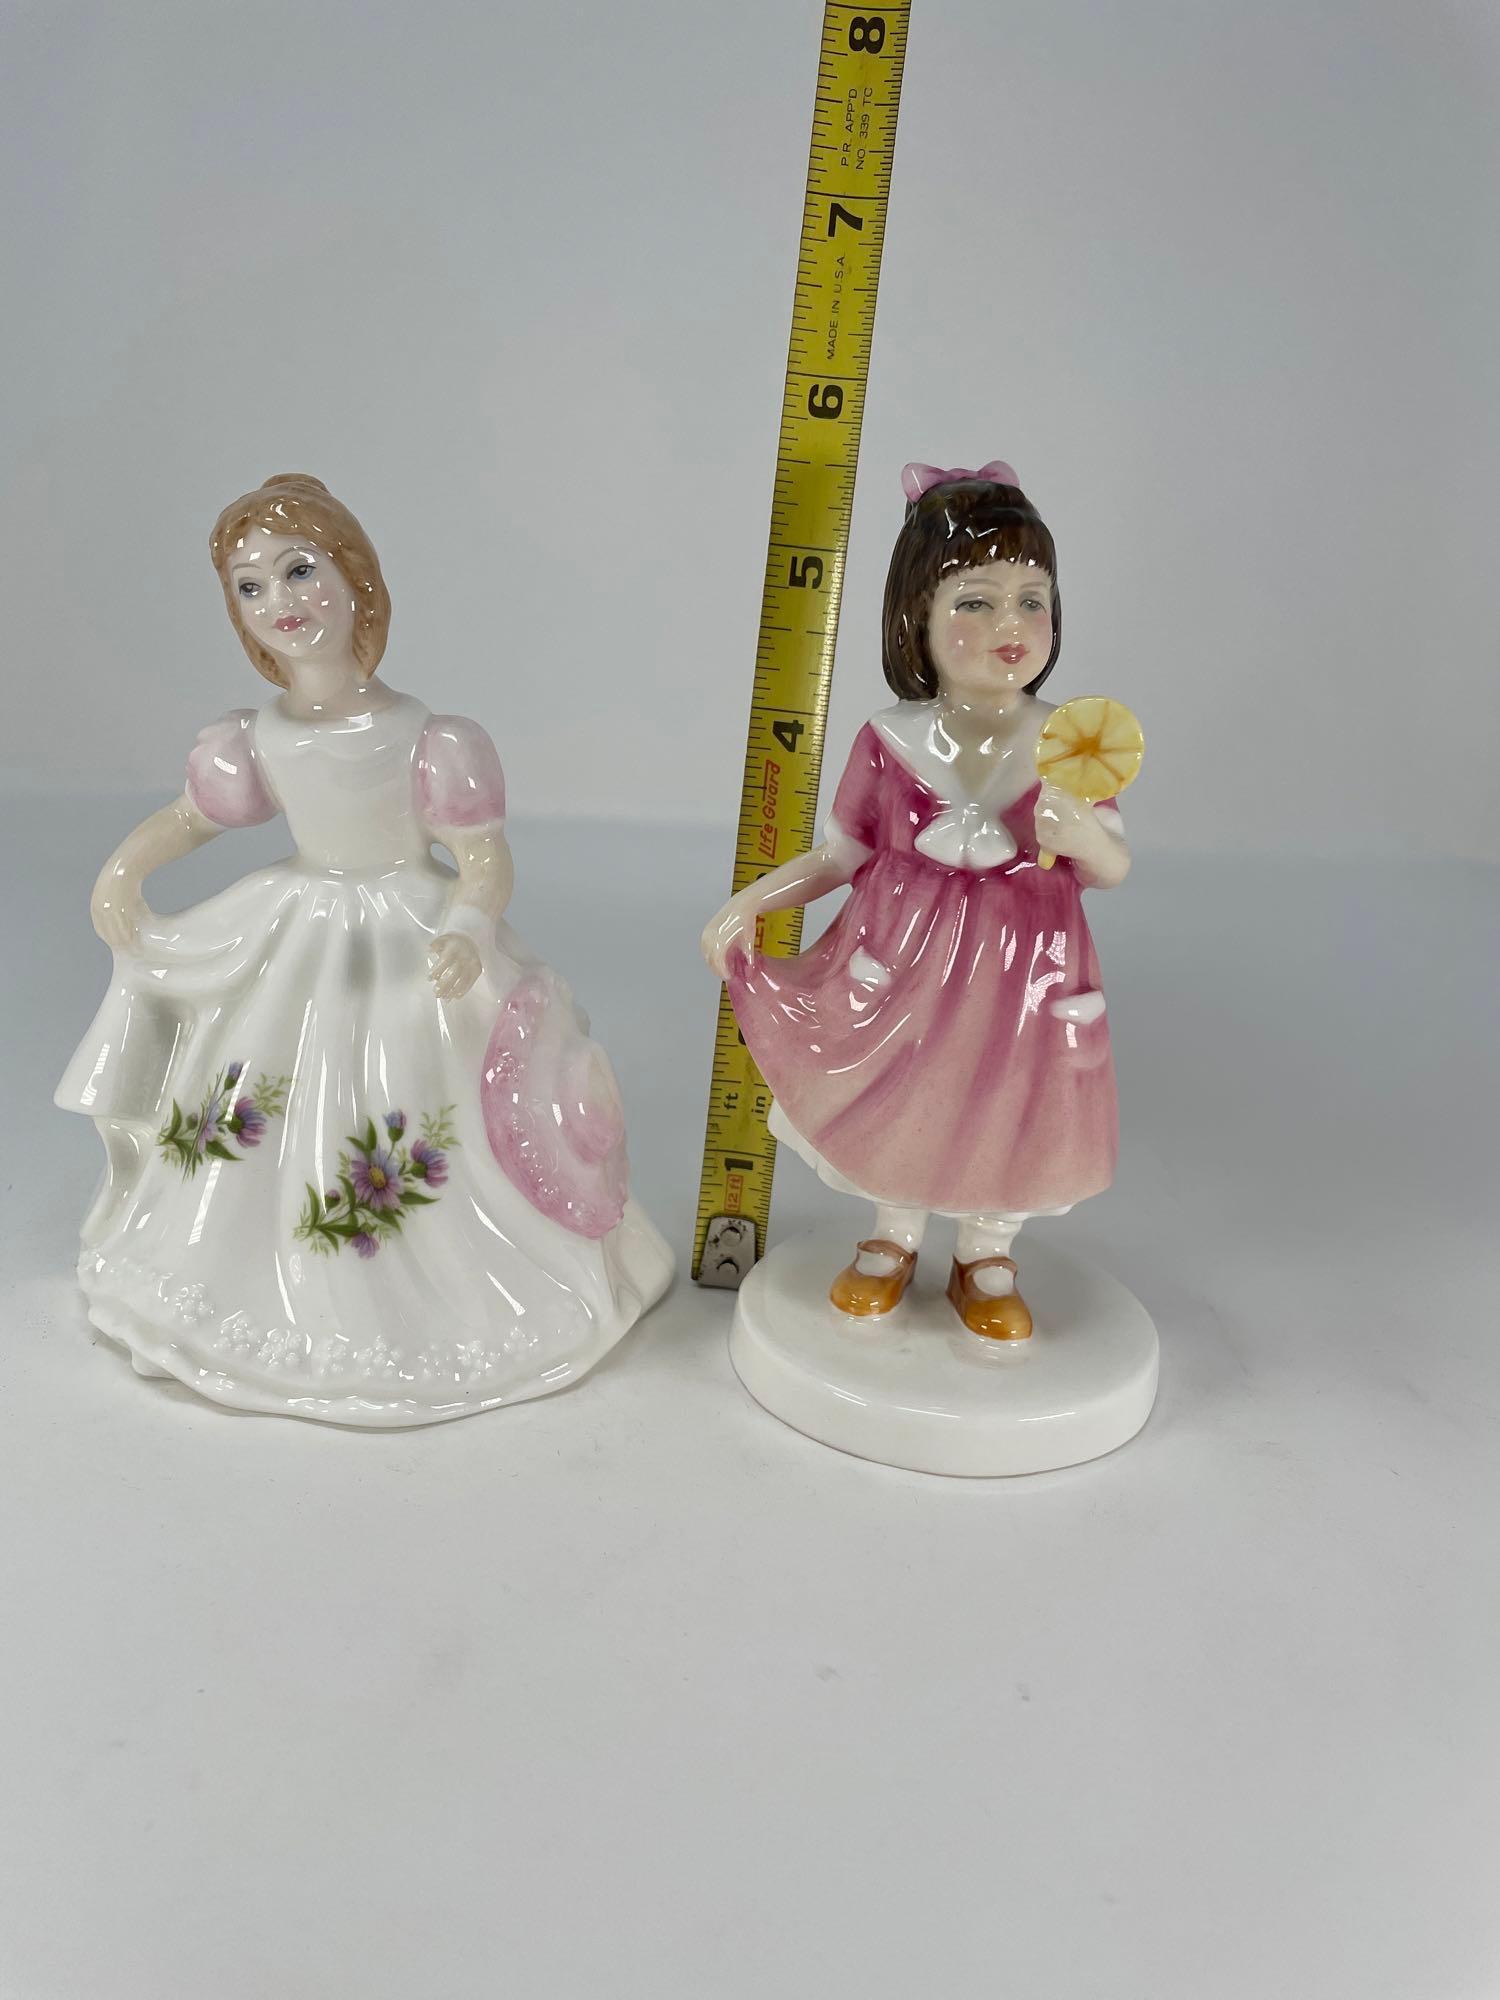 2 Royal Doulton Figures- 1983 "Mary" HN 2374 and 1975 "Ruth" HN 2799